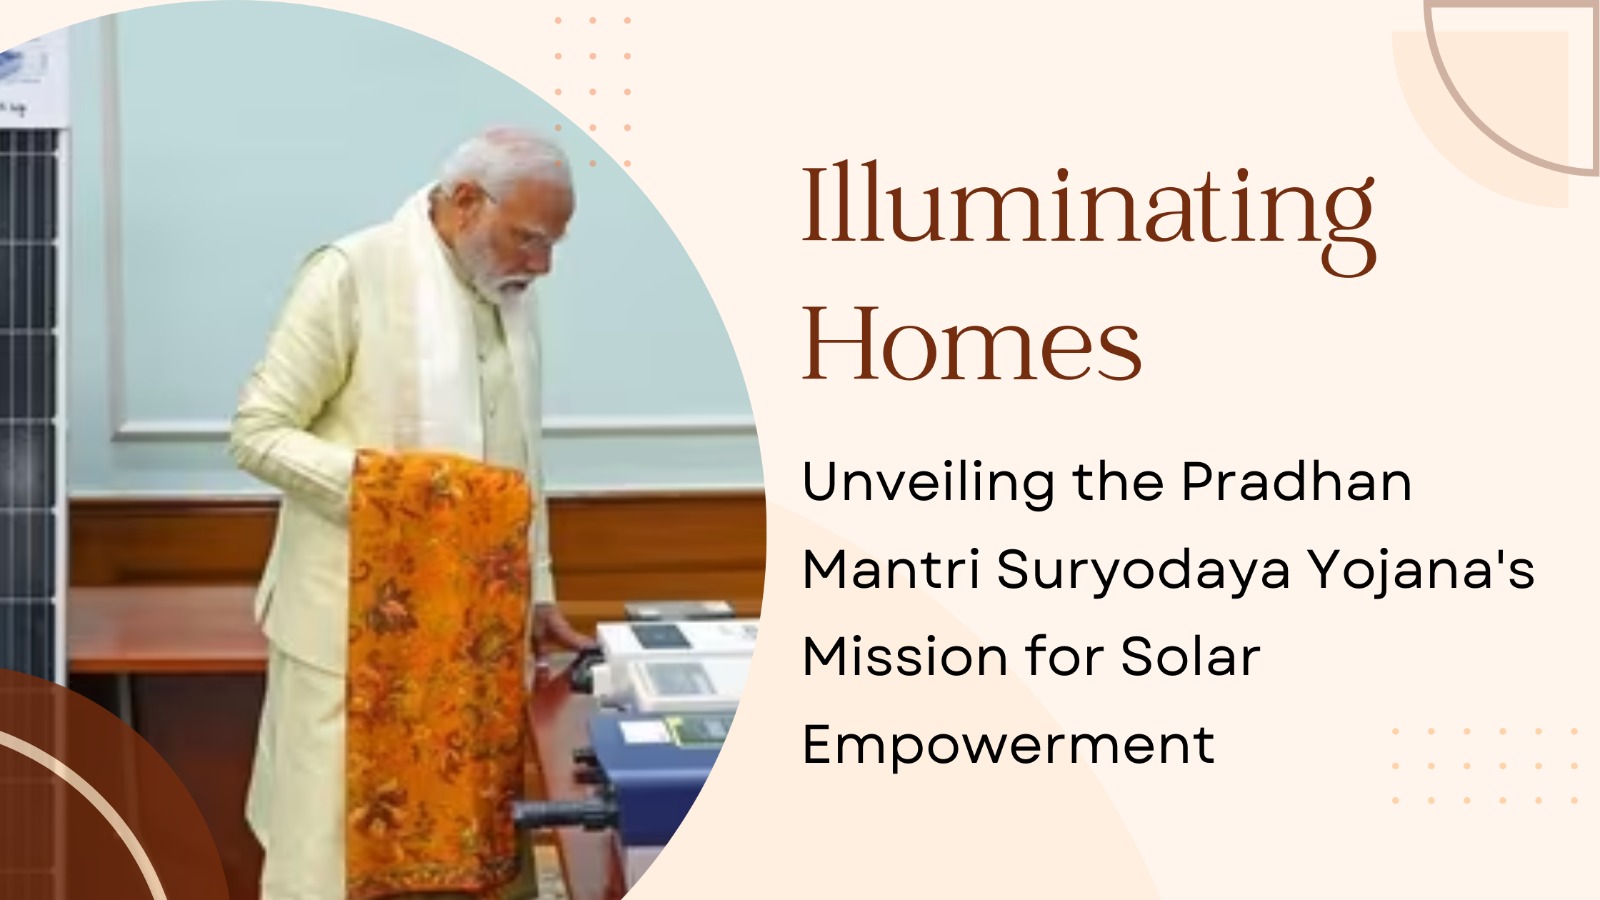 Pradhan Mantri Suryodaya Yojana’s Vision for Solar Empowerment in India